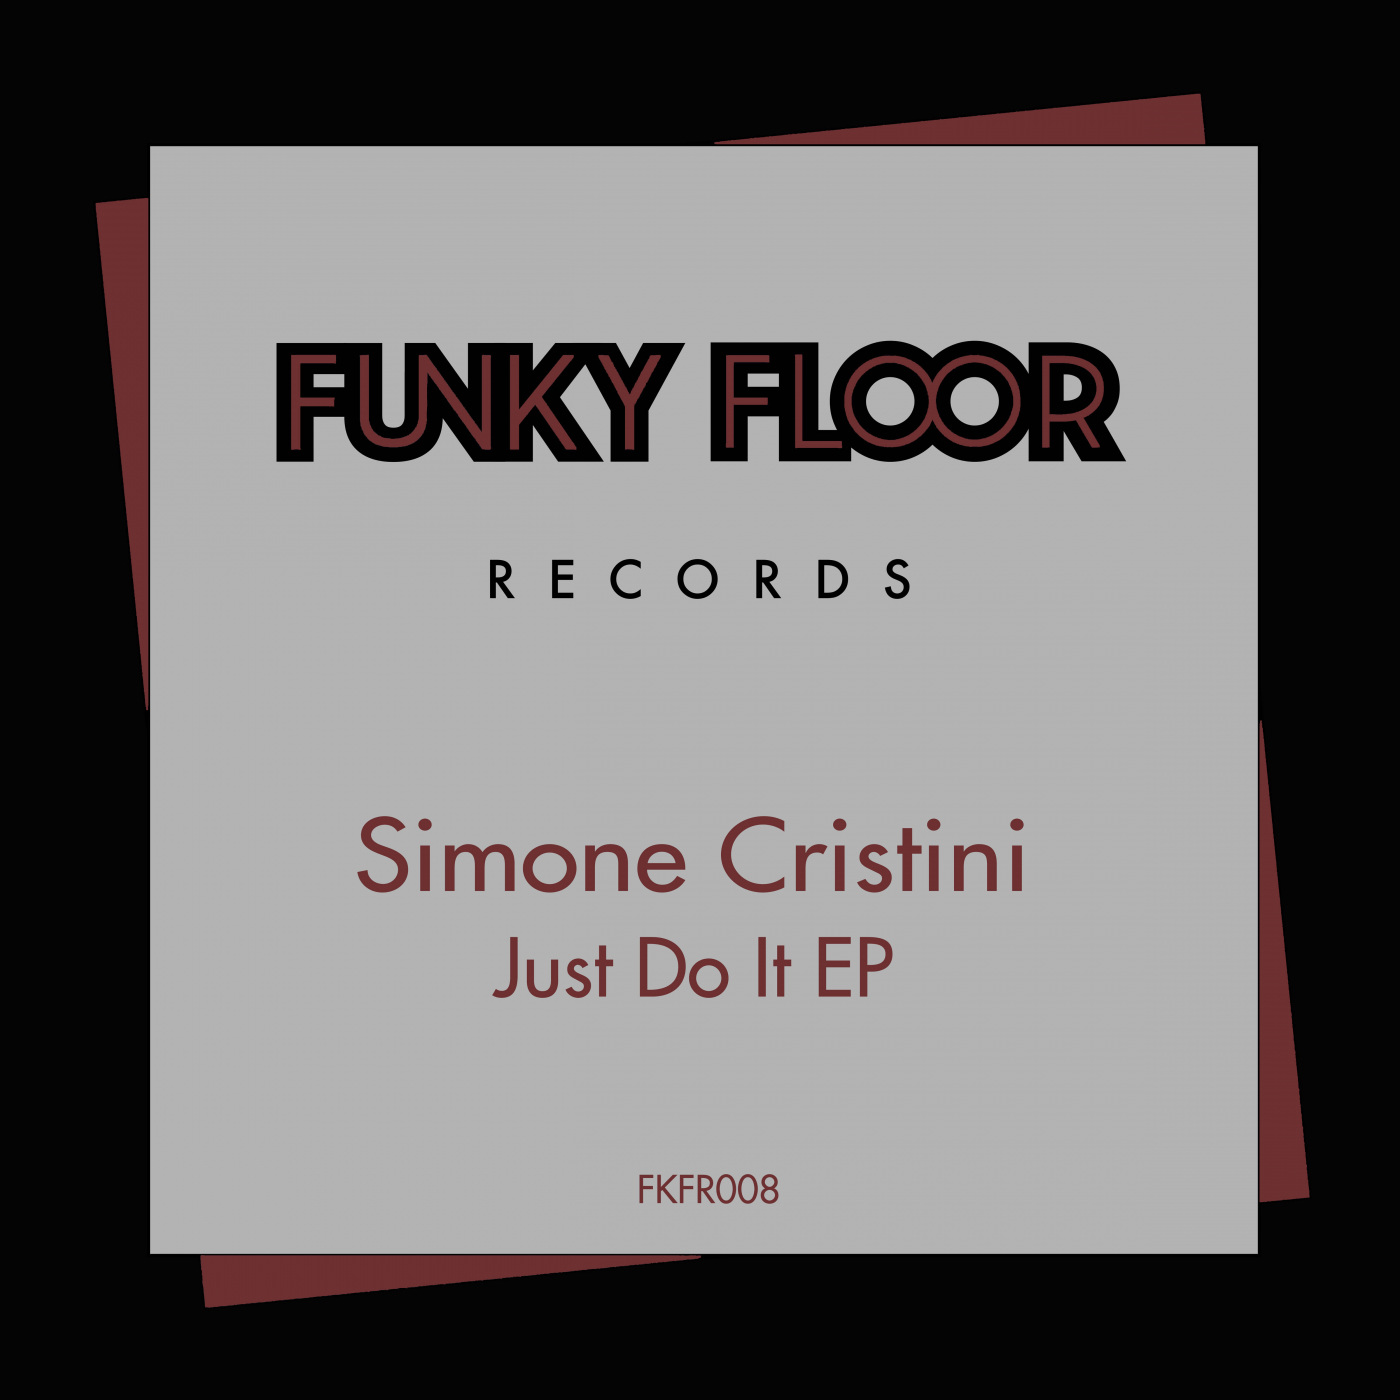 Simone Cristini - Just Do It EP / Funky Floor Records